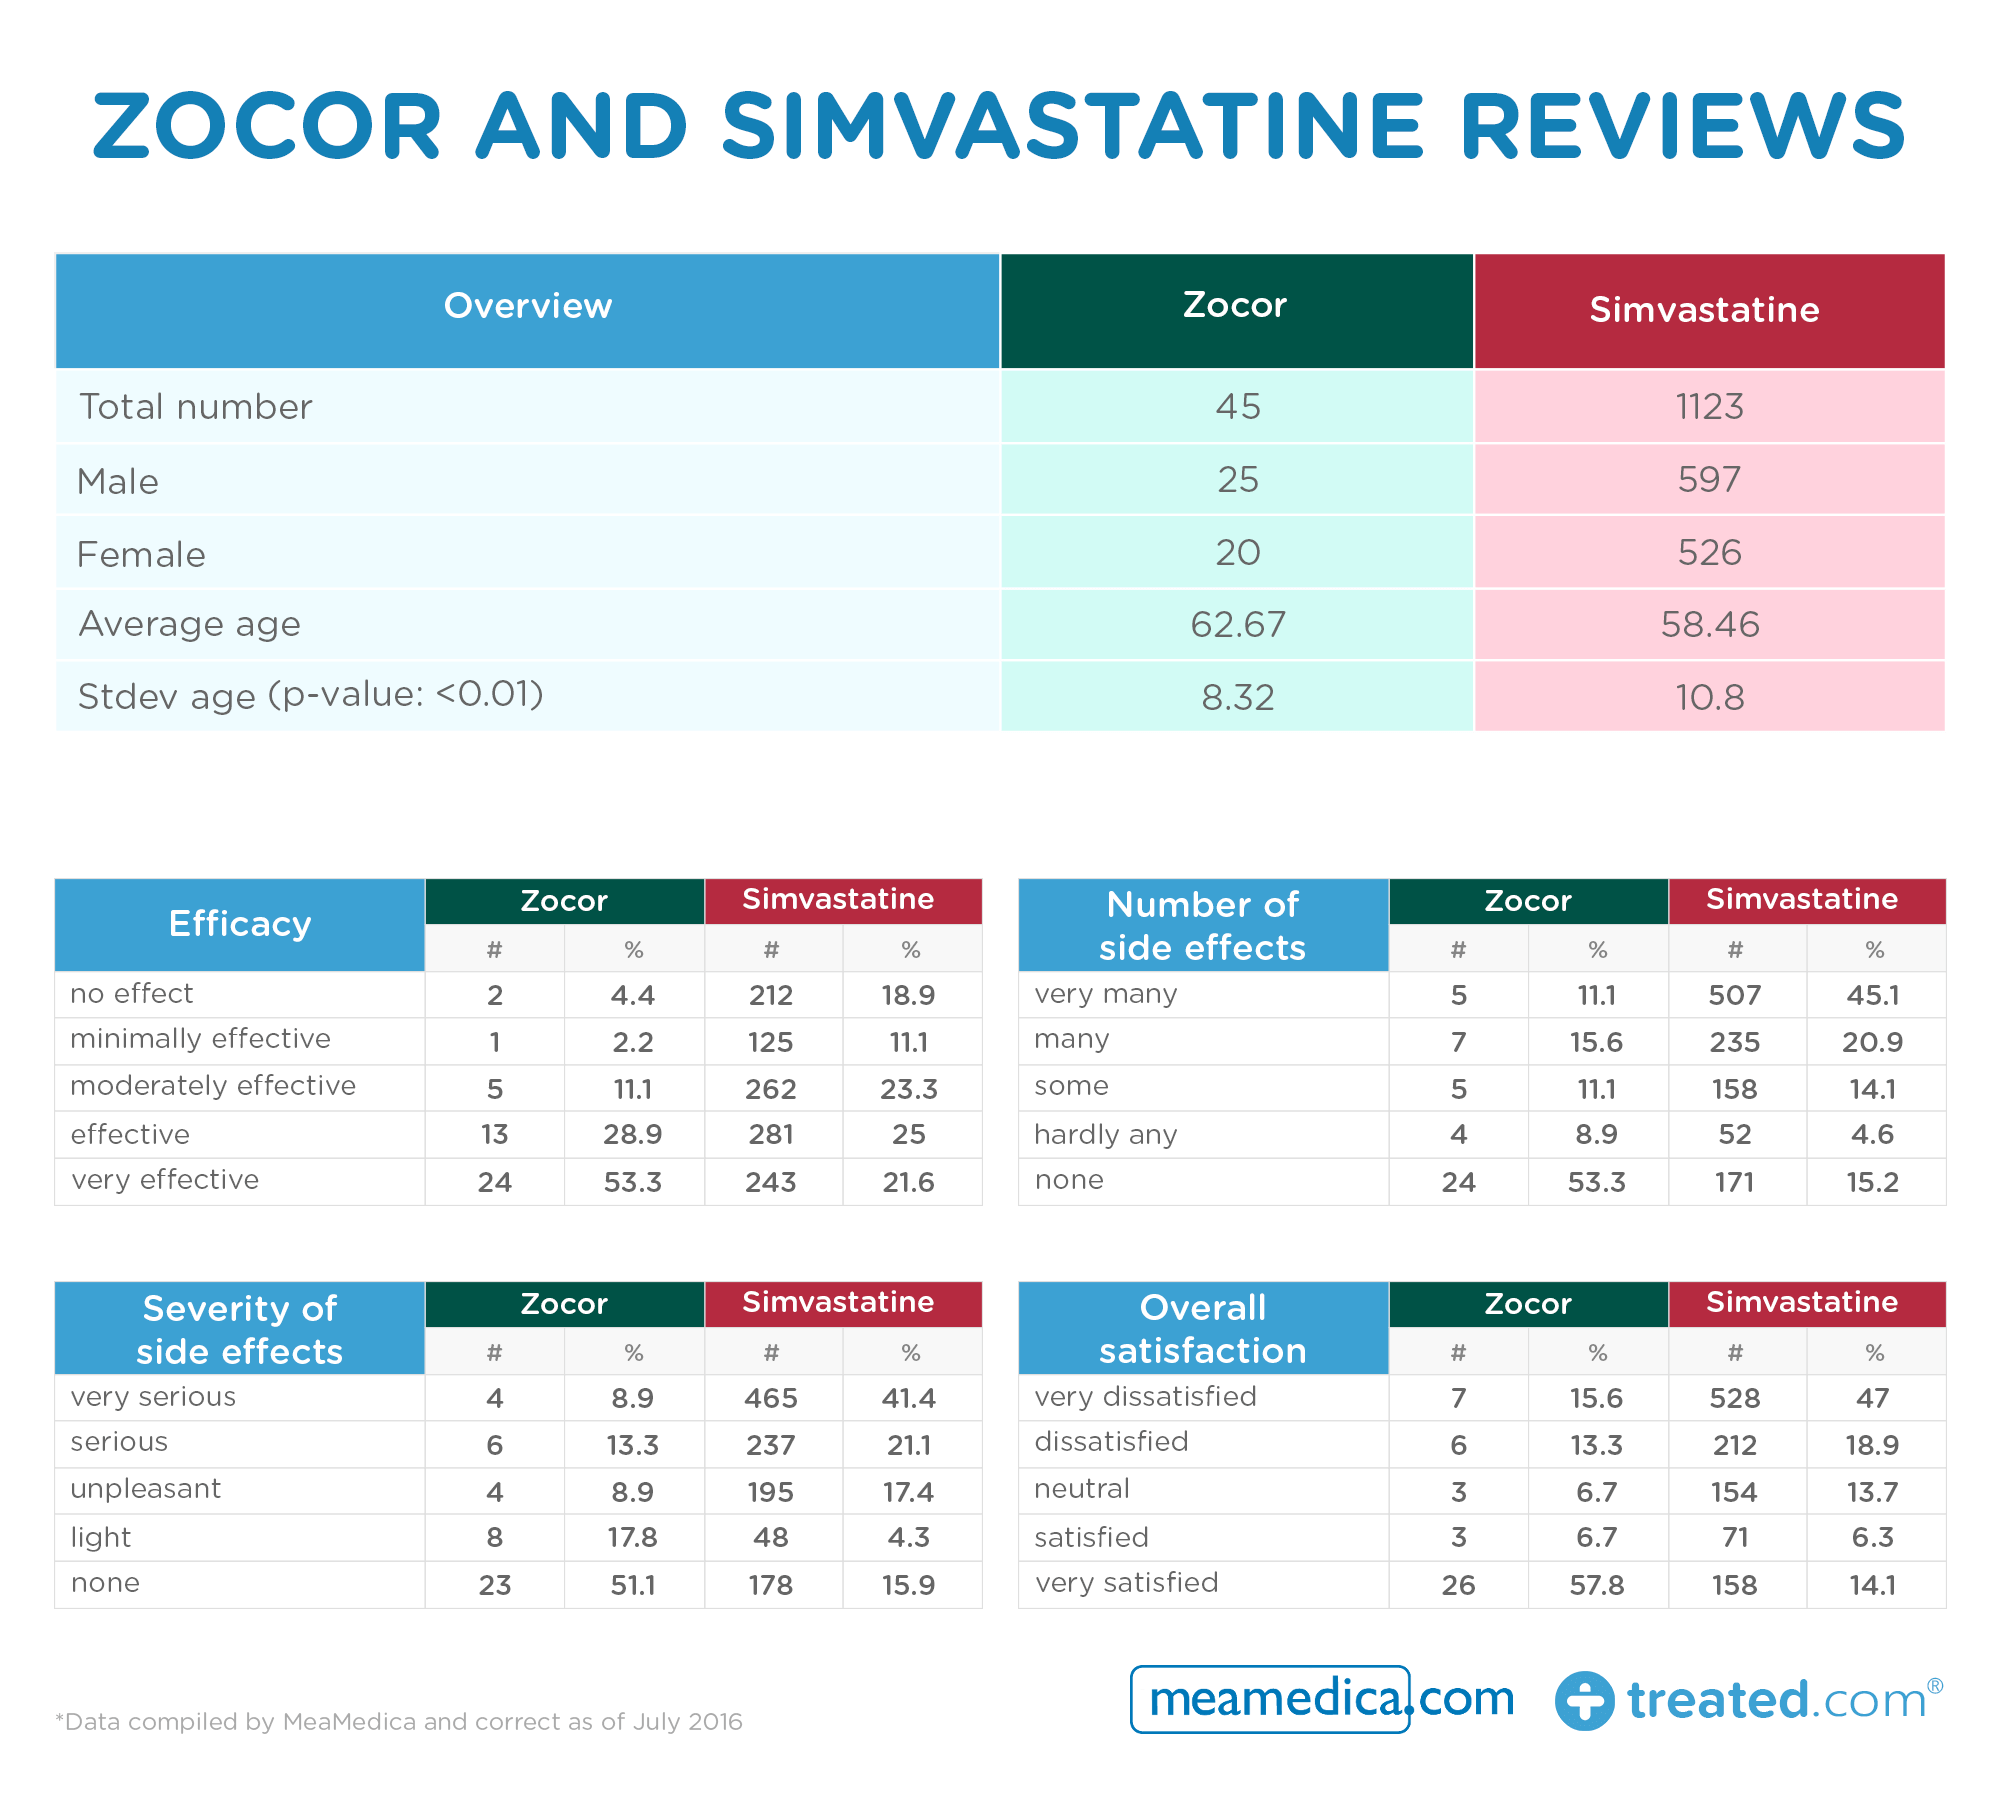 Zocor and Simvastatine reviews table